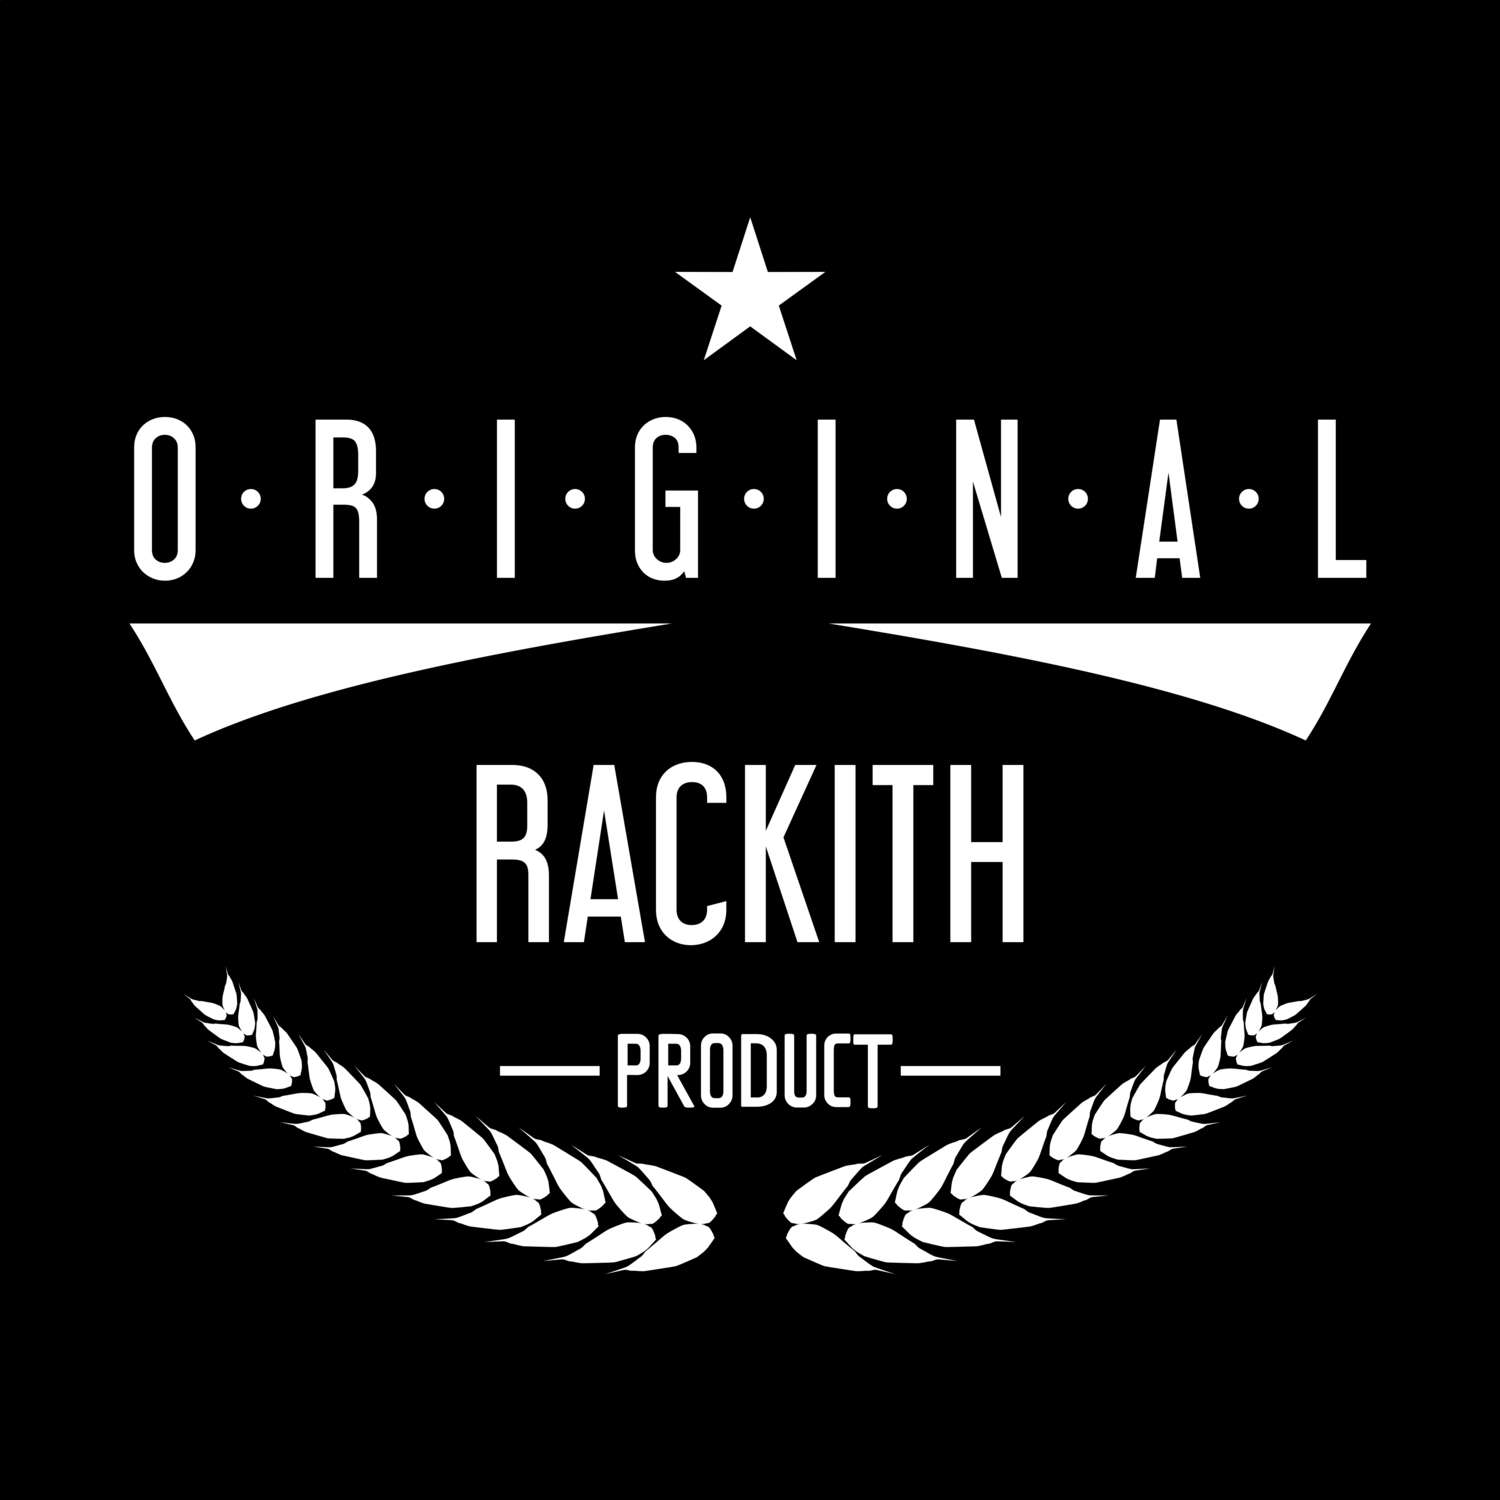 Rackith T-Shirt »Original Product«